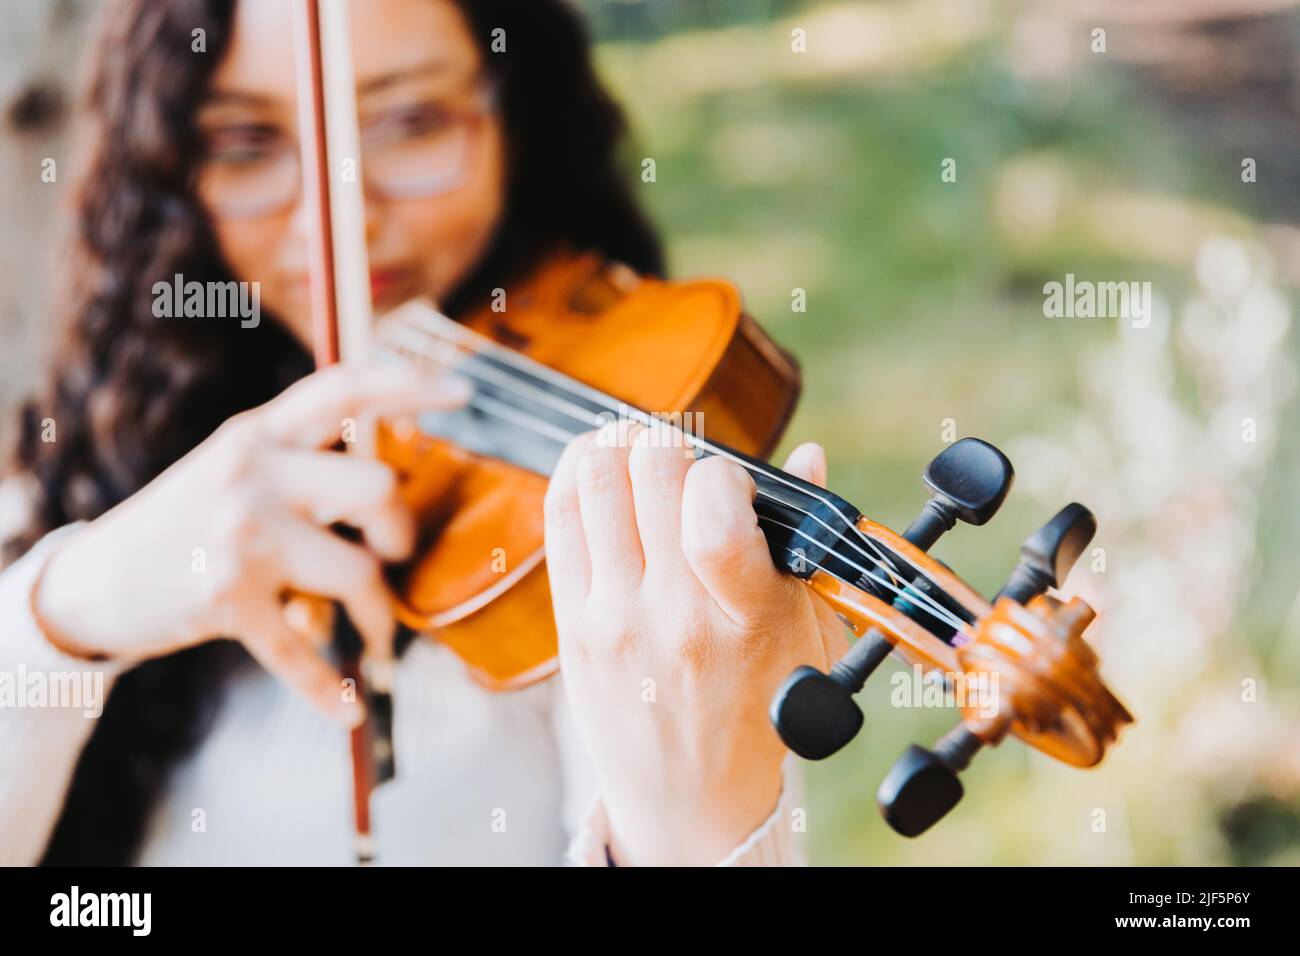 unrecognizable curly brunette woman doing pizzicato technique in violin. Selective focus. Stock Photo